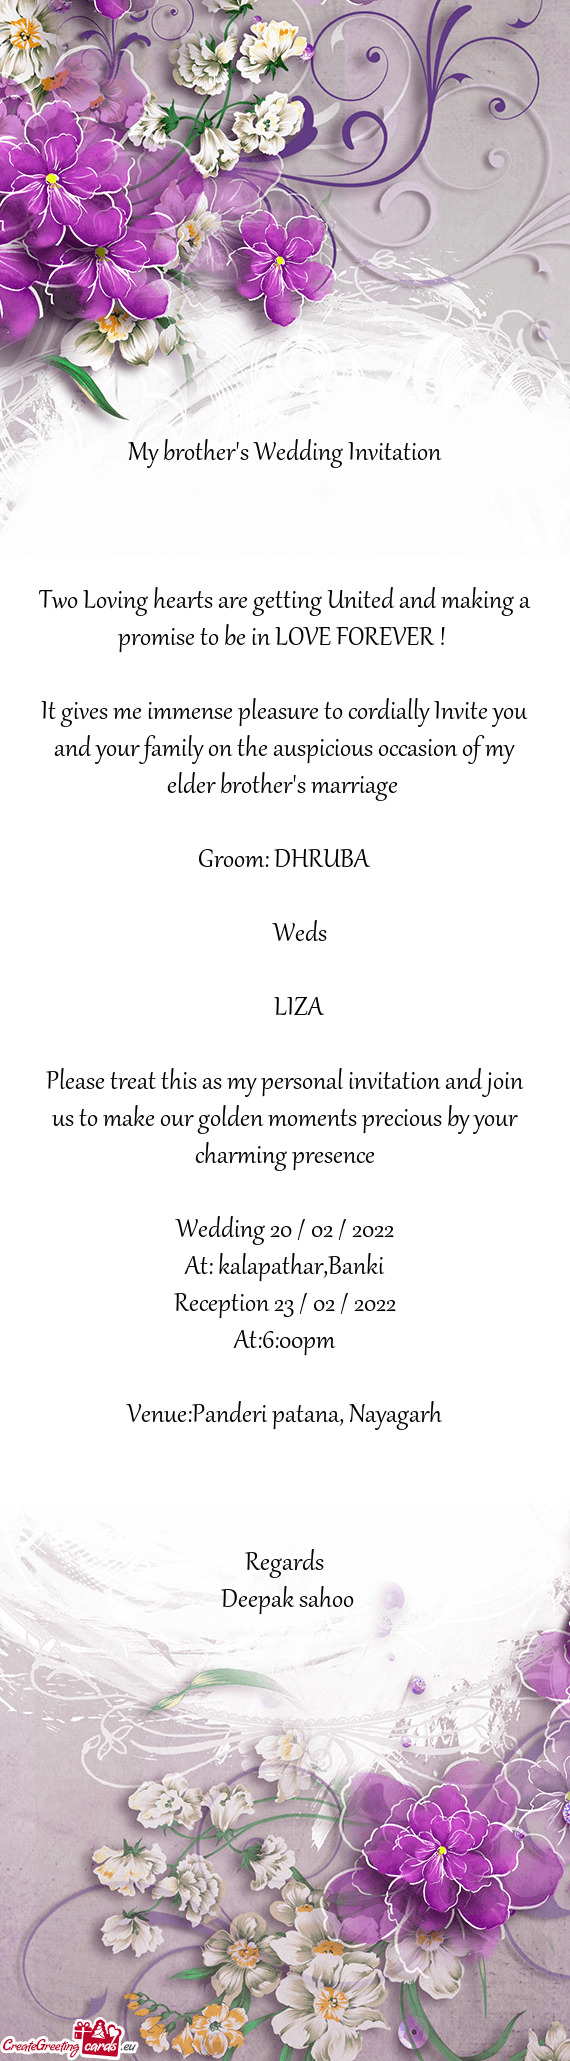 Wedding 20 / 02 / 2022